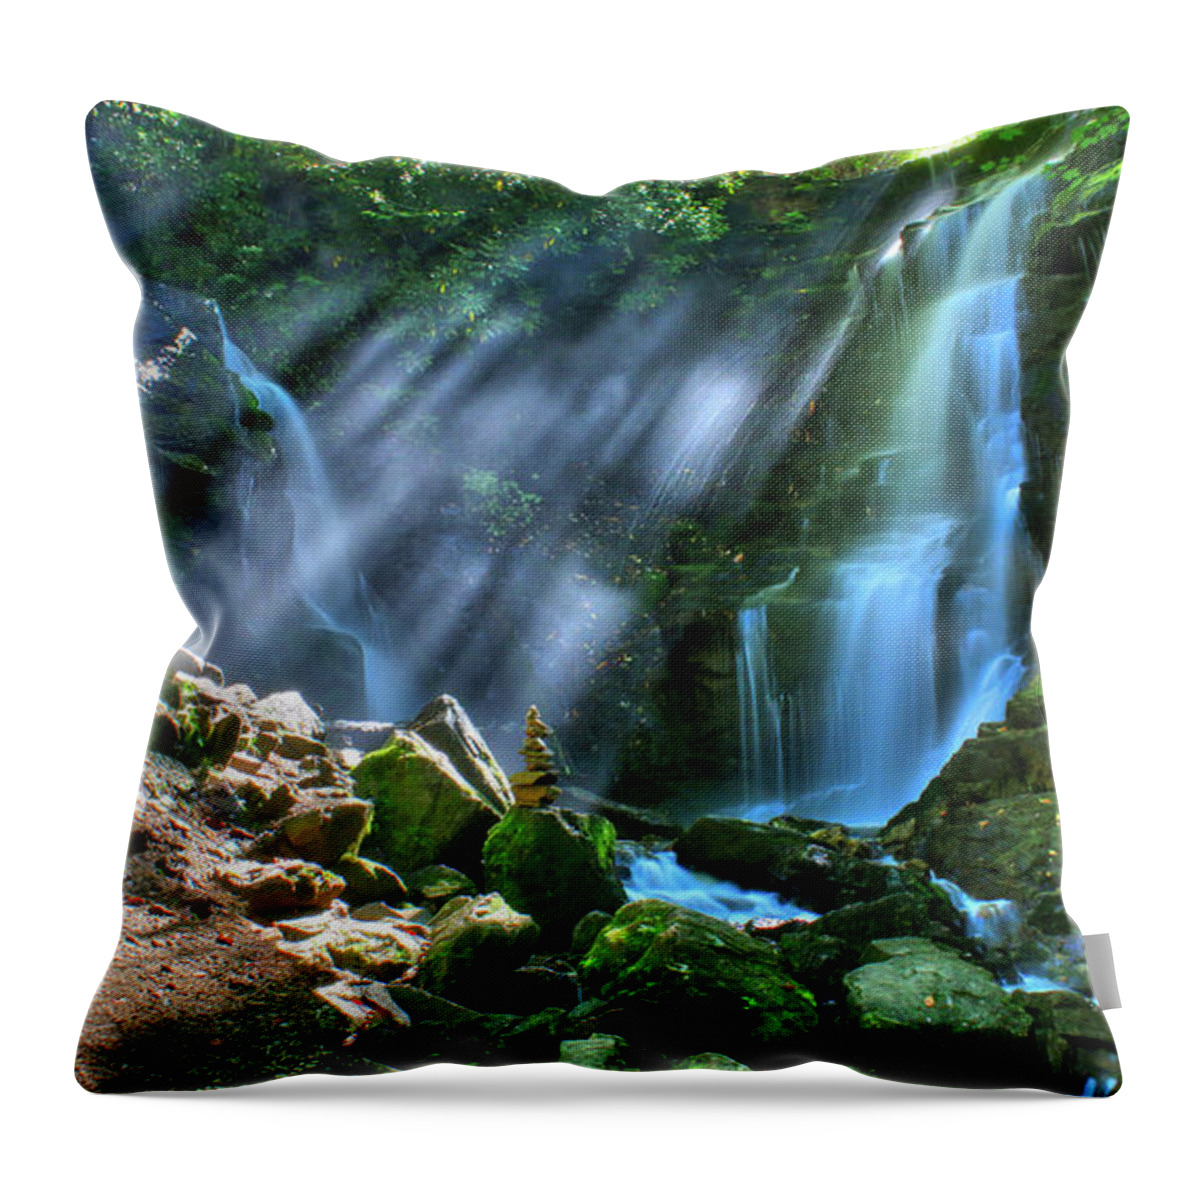 Nunweiler Throw Pillow featuring the photograph Soco Falls by Nunweiler Photography